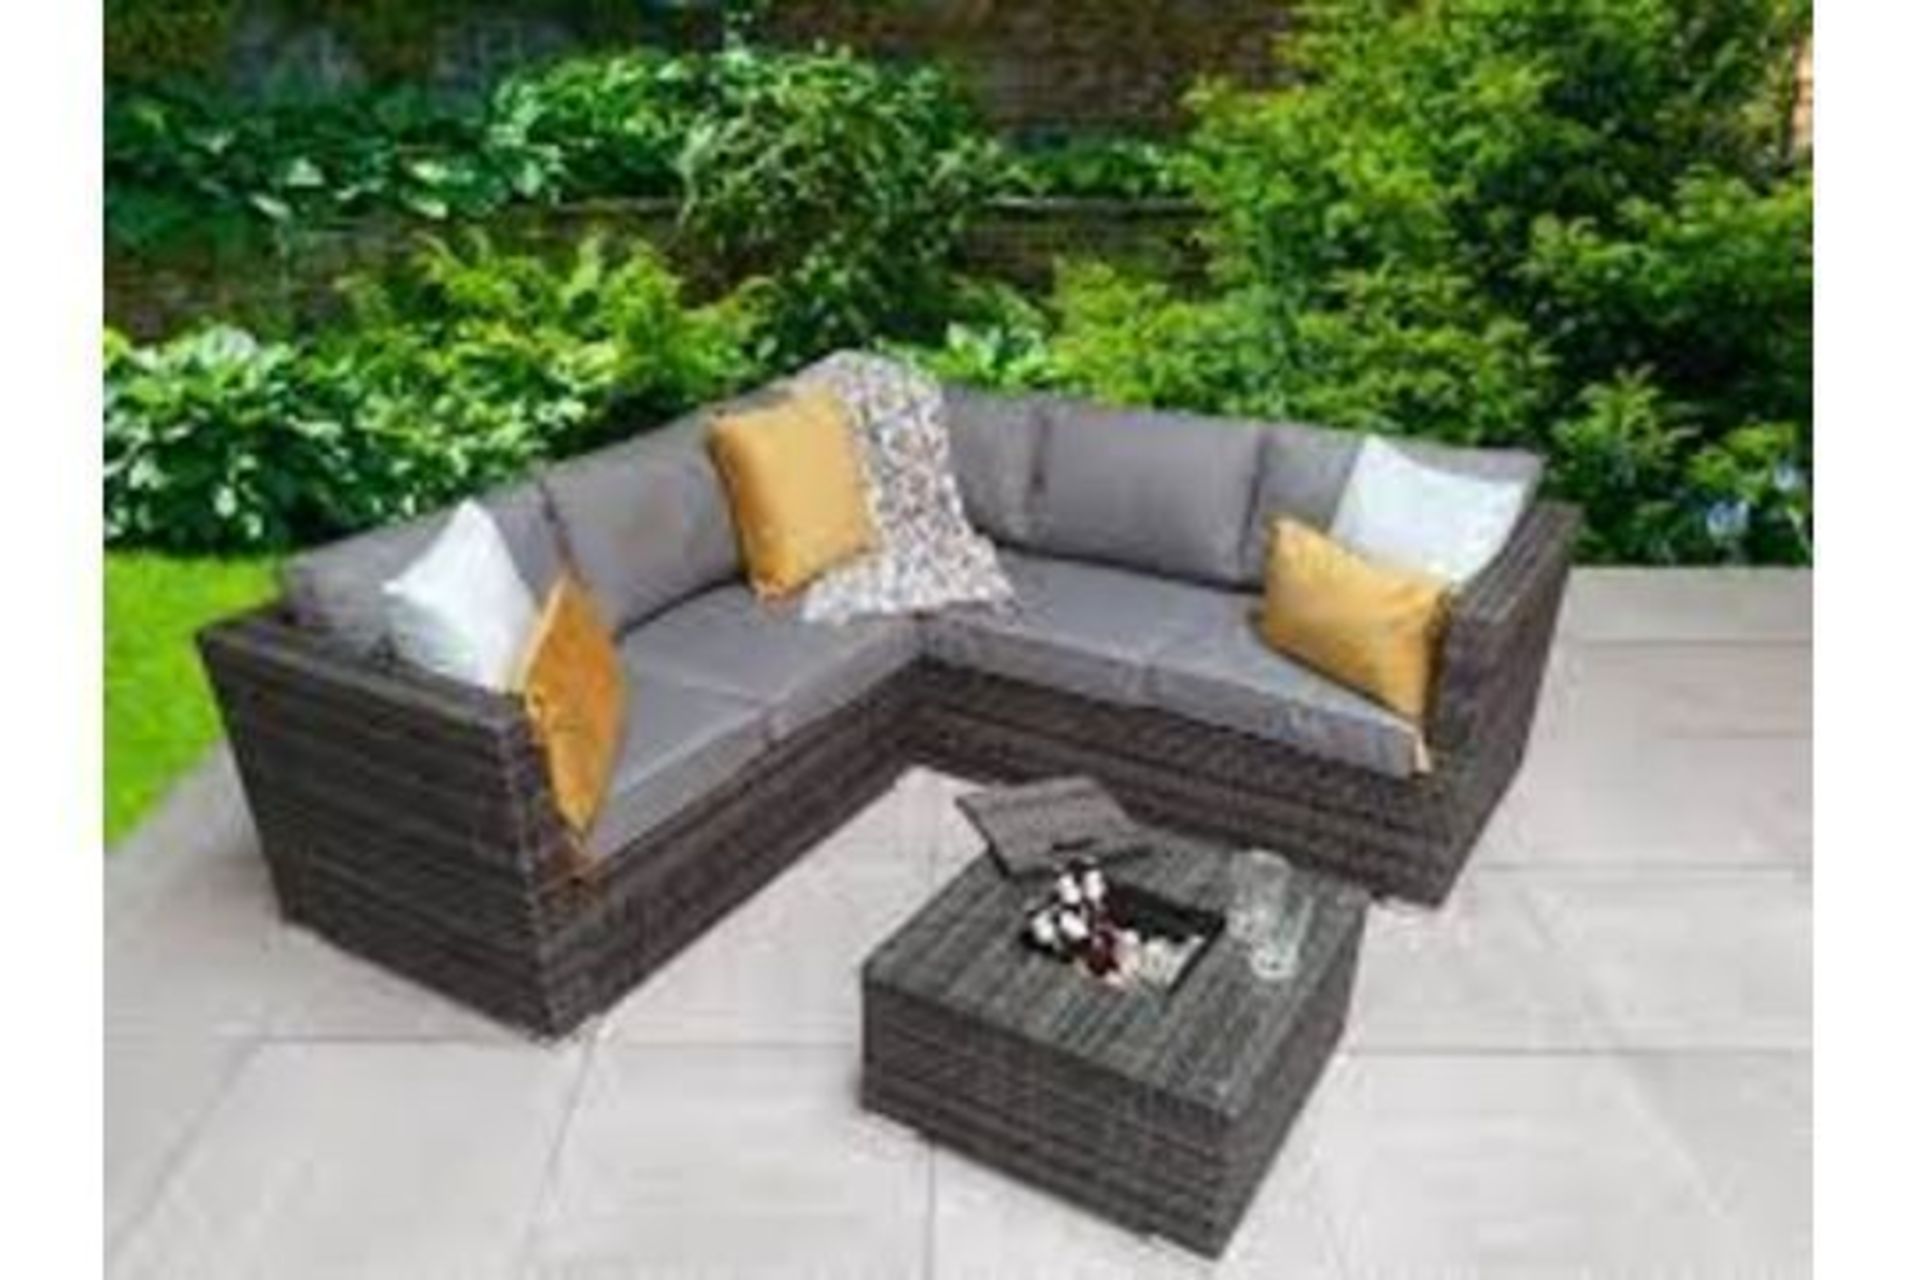 Signature Weave Garden Georgia Grey Corner Sofa Set with Coffee Table & Ice Bucket. Modern and